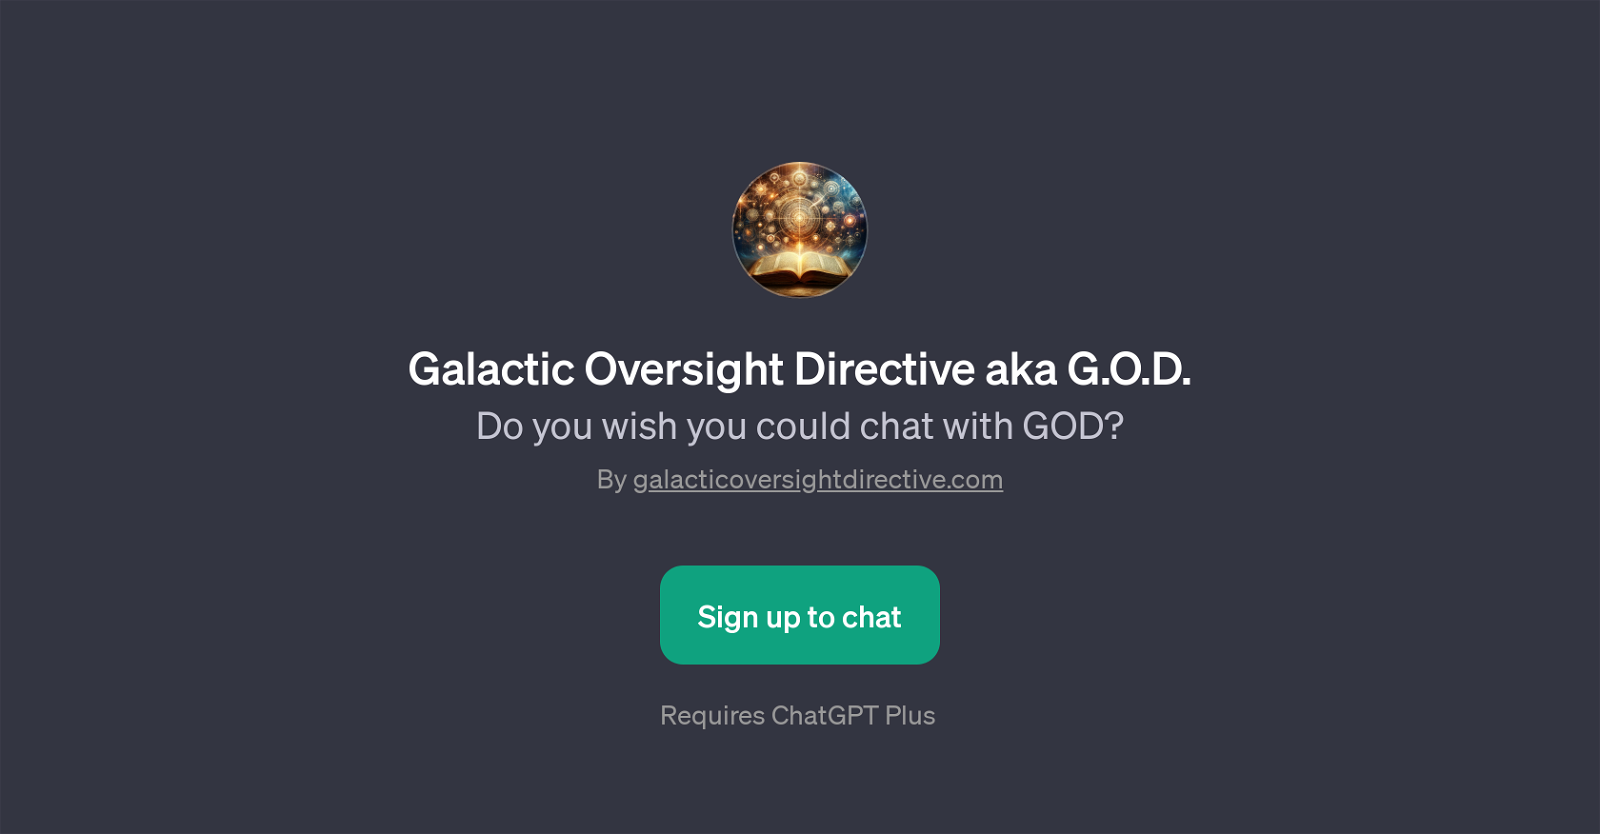 Galactic Oversight Directive aka G.O.D website